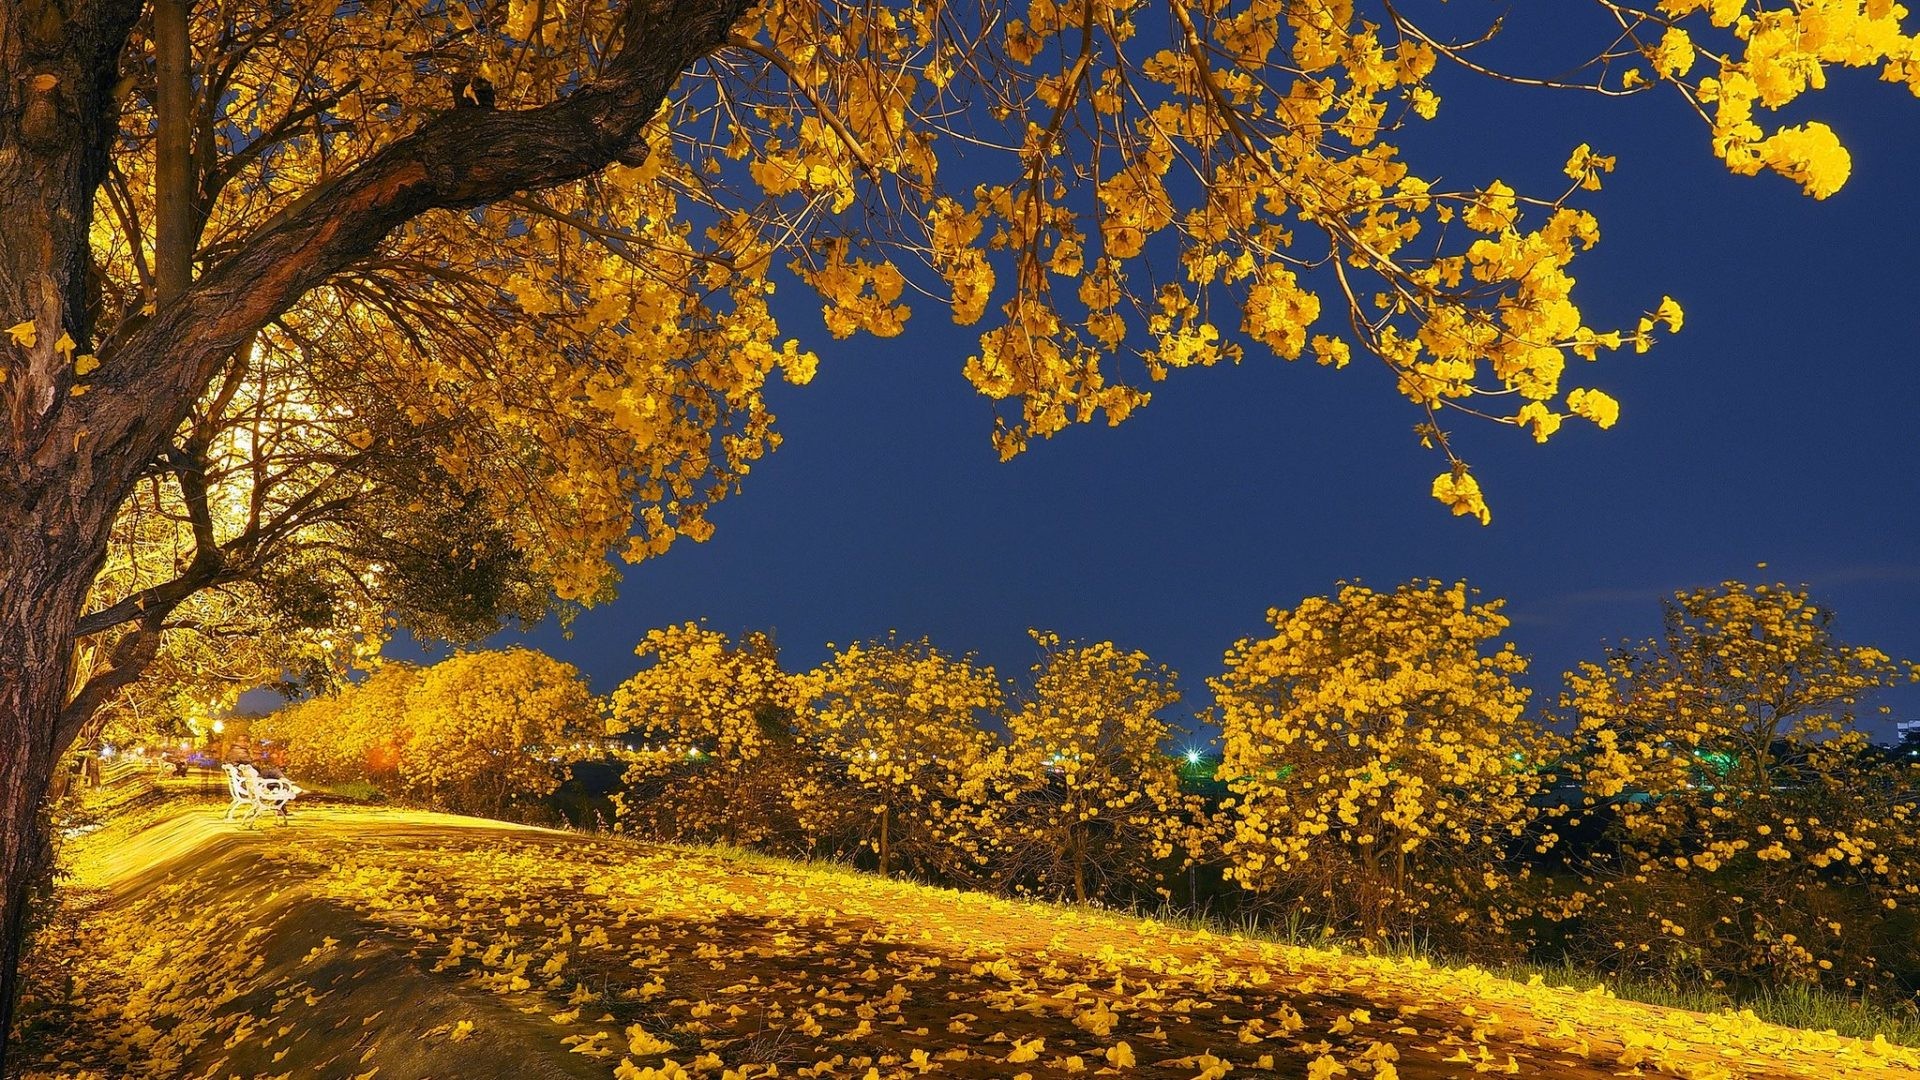 1920x1080 Romantic Tag - Falling Nature Night Yellow Trees Sky Tree Autumn Leaves  Tonight Park Landscape Fall